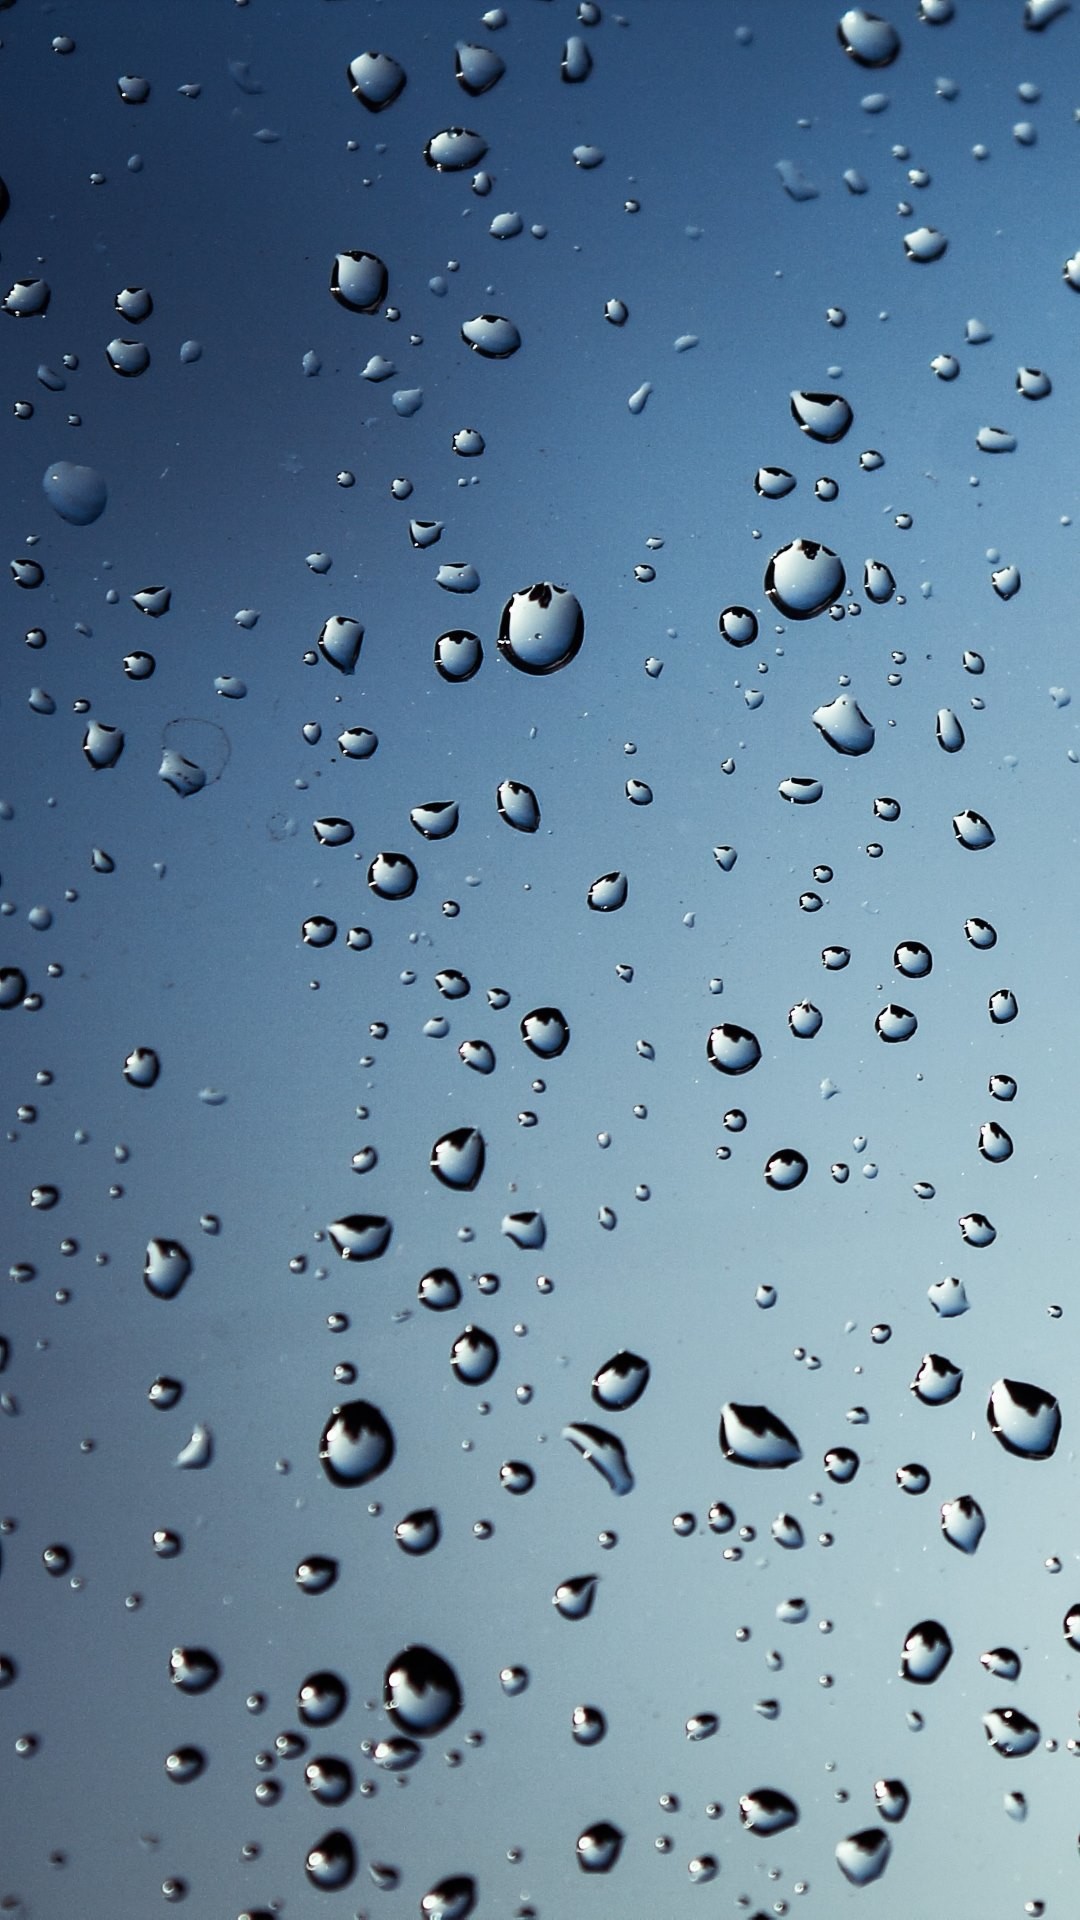 1080x1920 Rain Drops on Window #photo #wallpaper #free Photographer: Krzysztof Pluta.  License